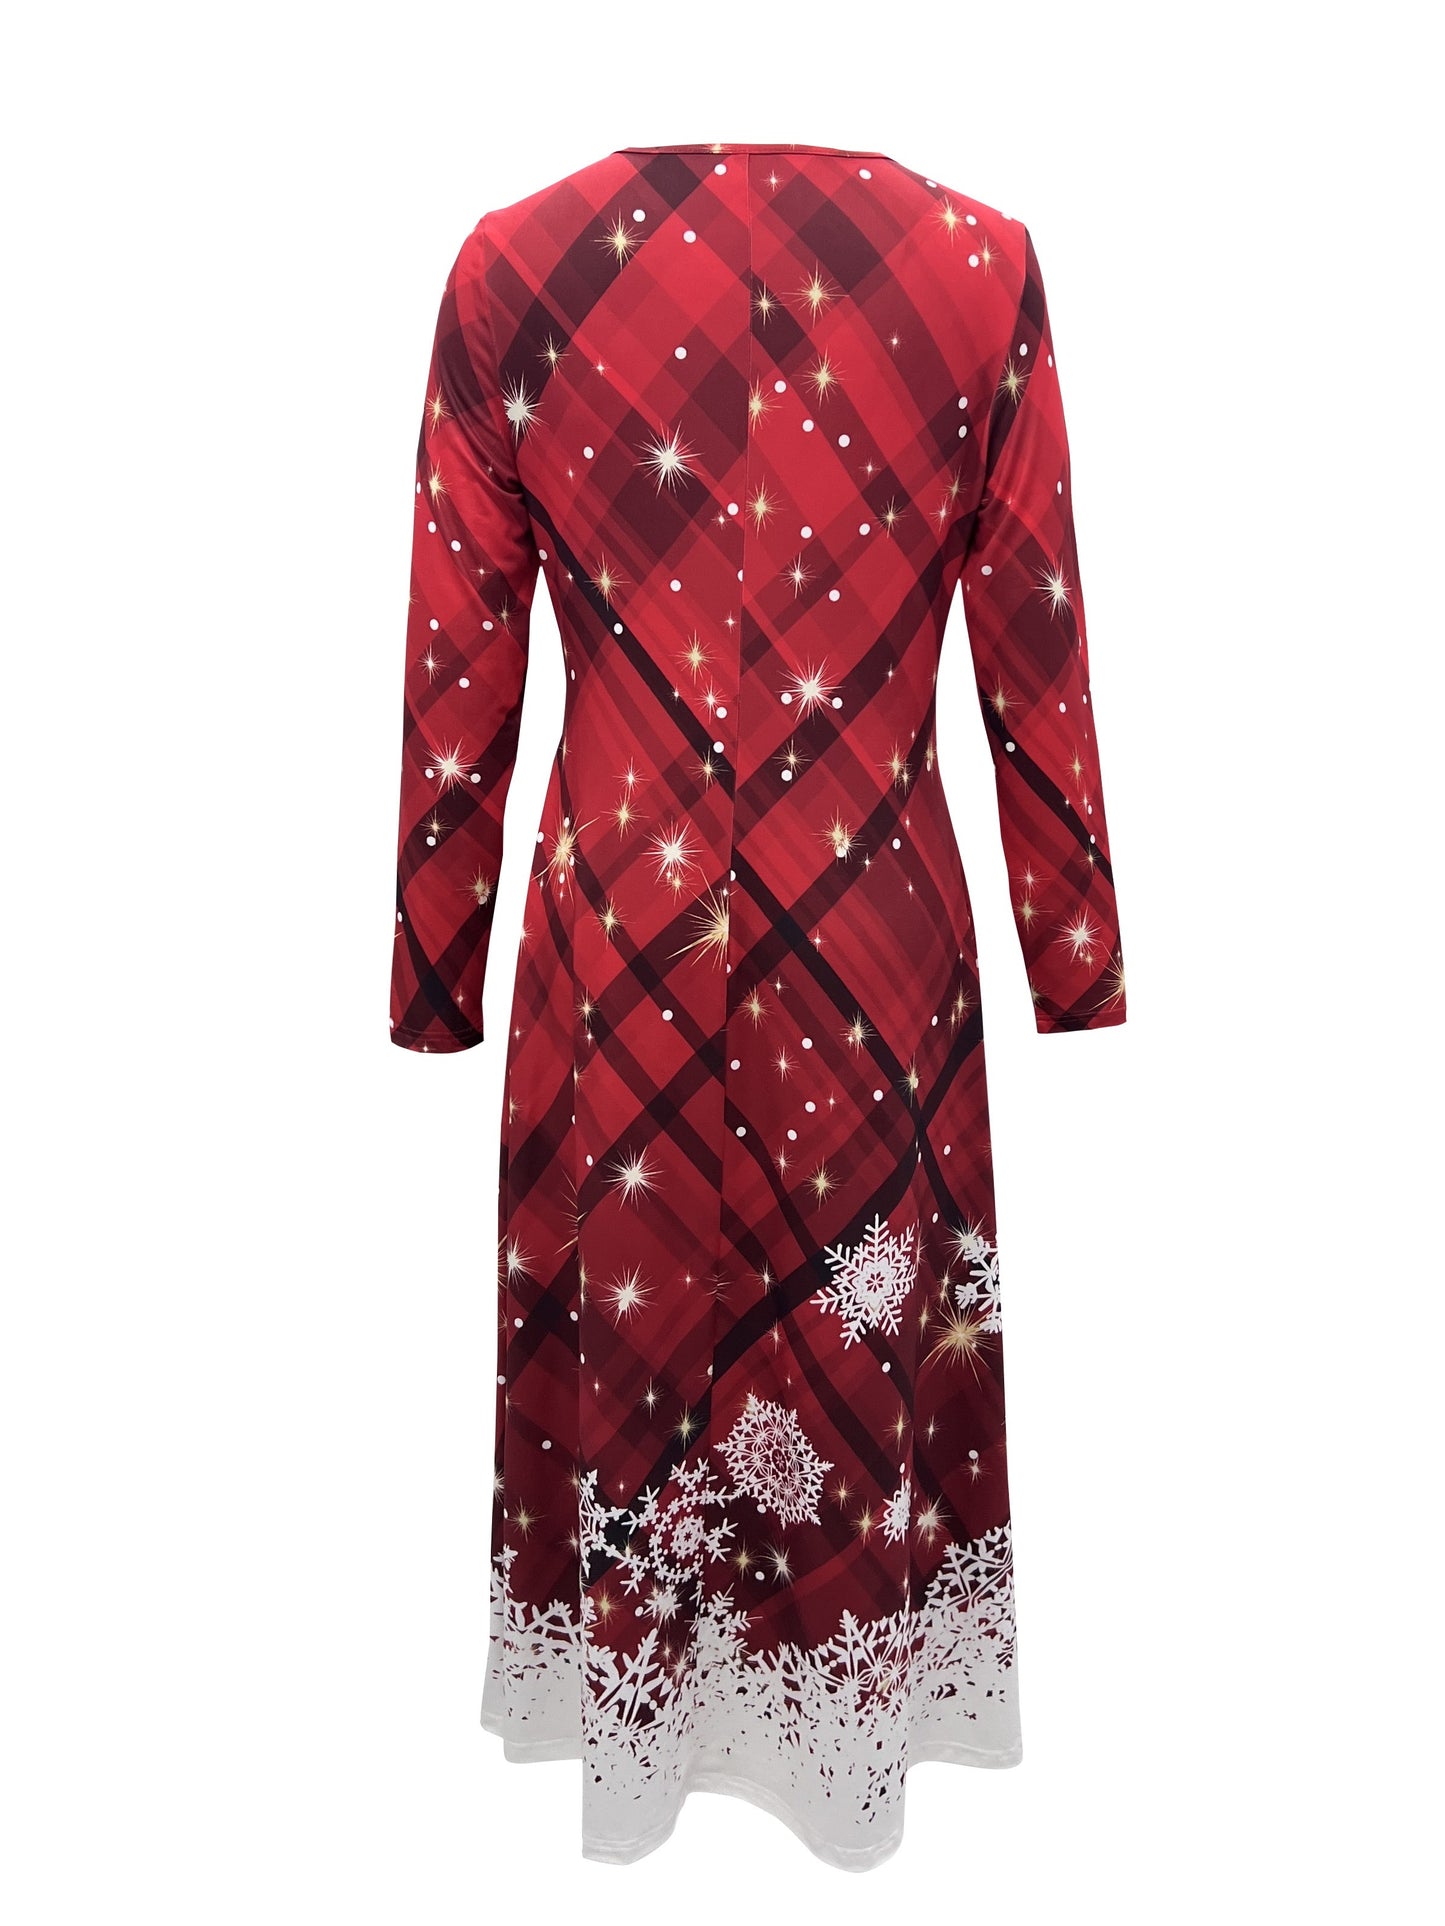 Christmas Graphic Print Dress, Casual Long Sleeve Crew Neck Dress, Women's Clothing